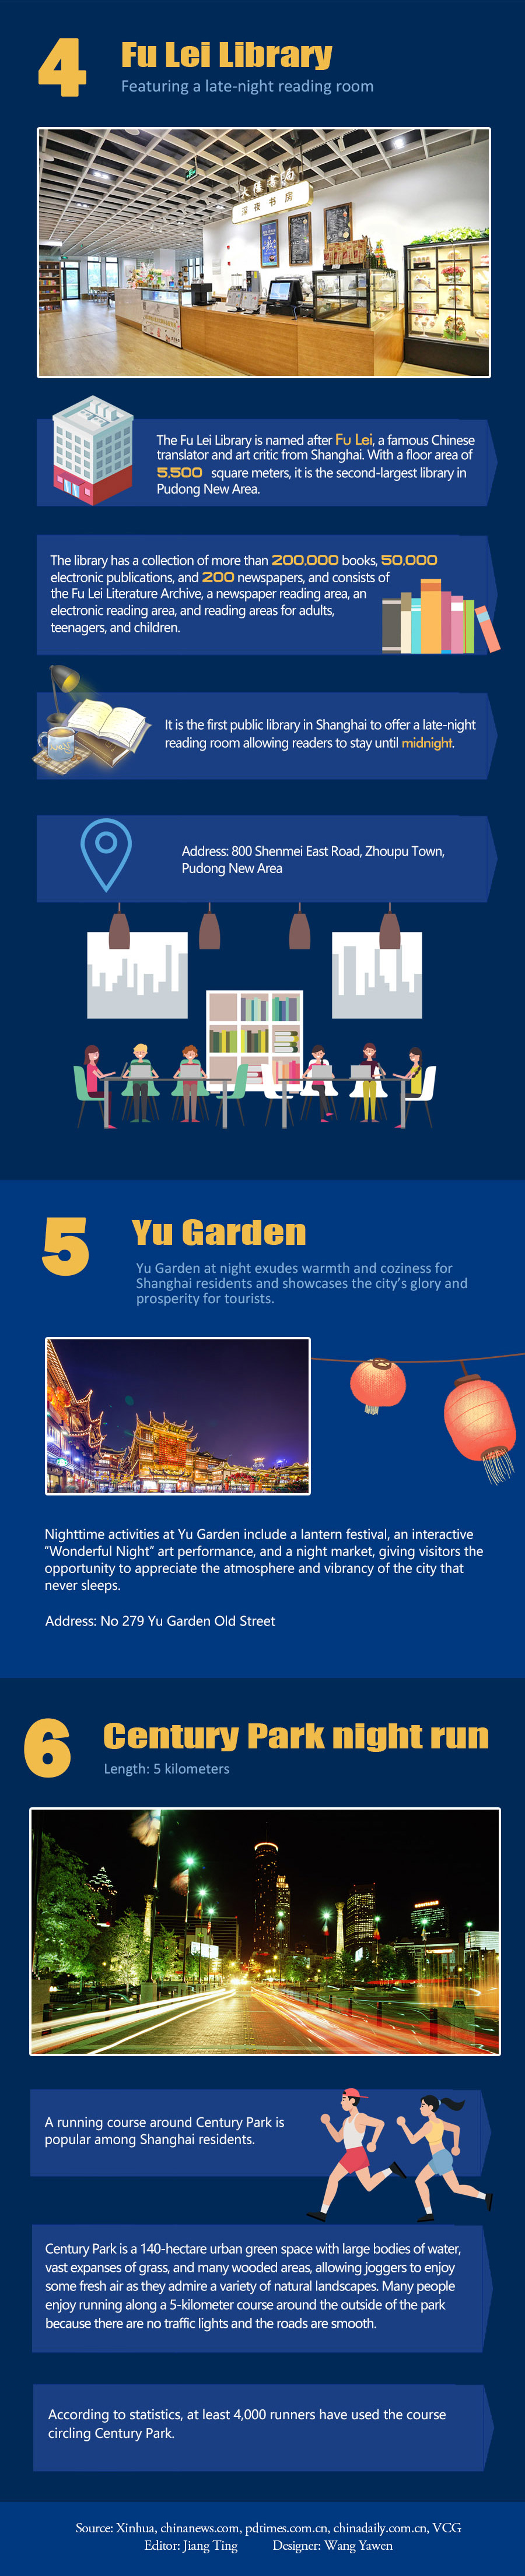 nighttime guide to shanghai2.jpg